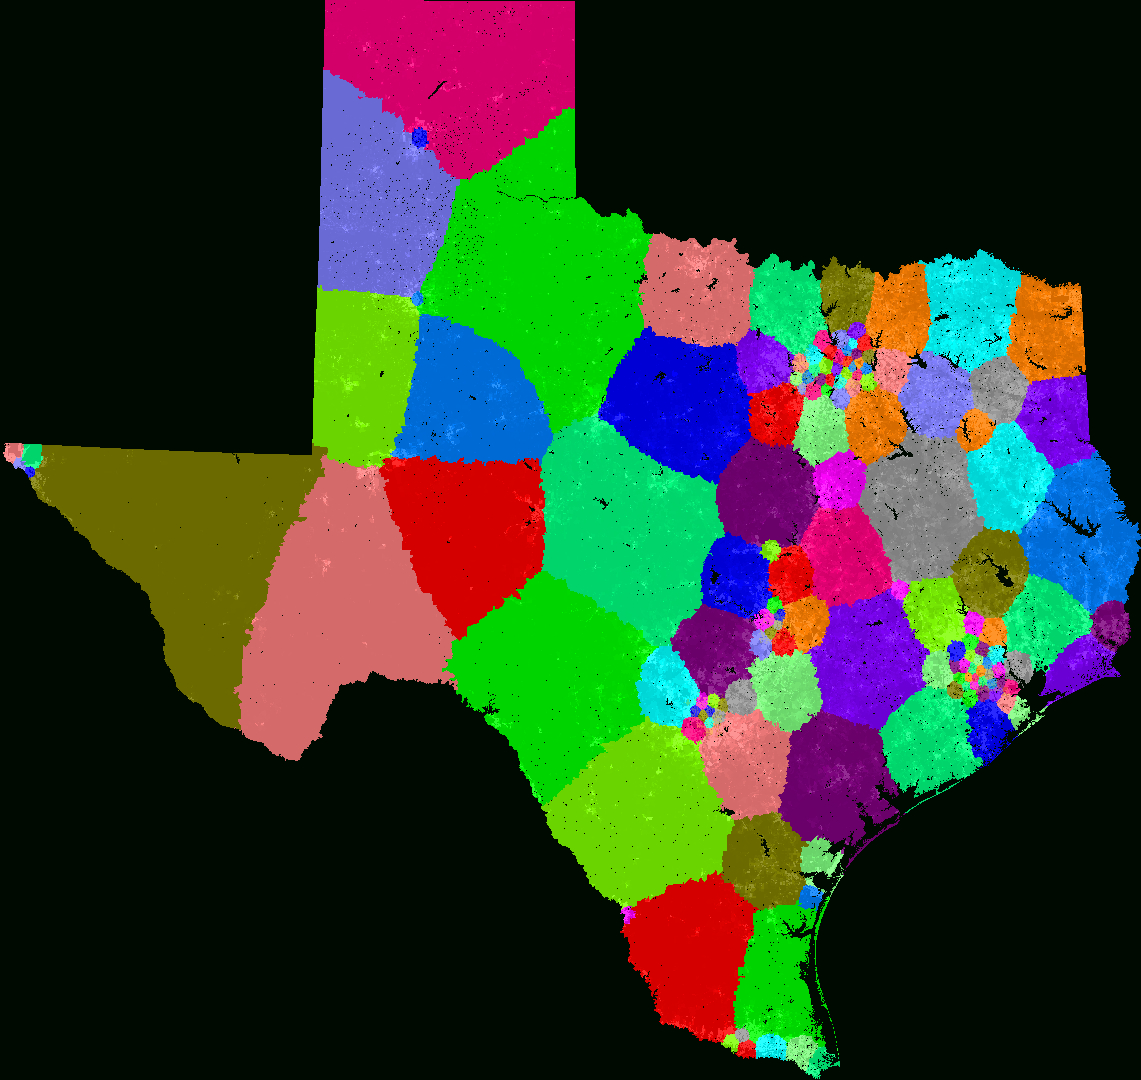 Texas House Of Representatives Redistricting - Texas State Representatives Map